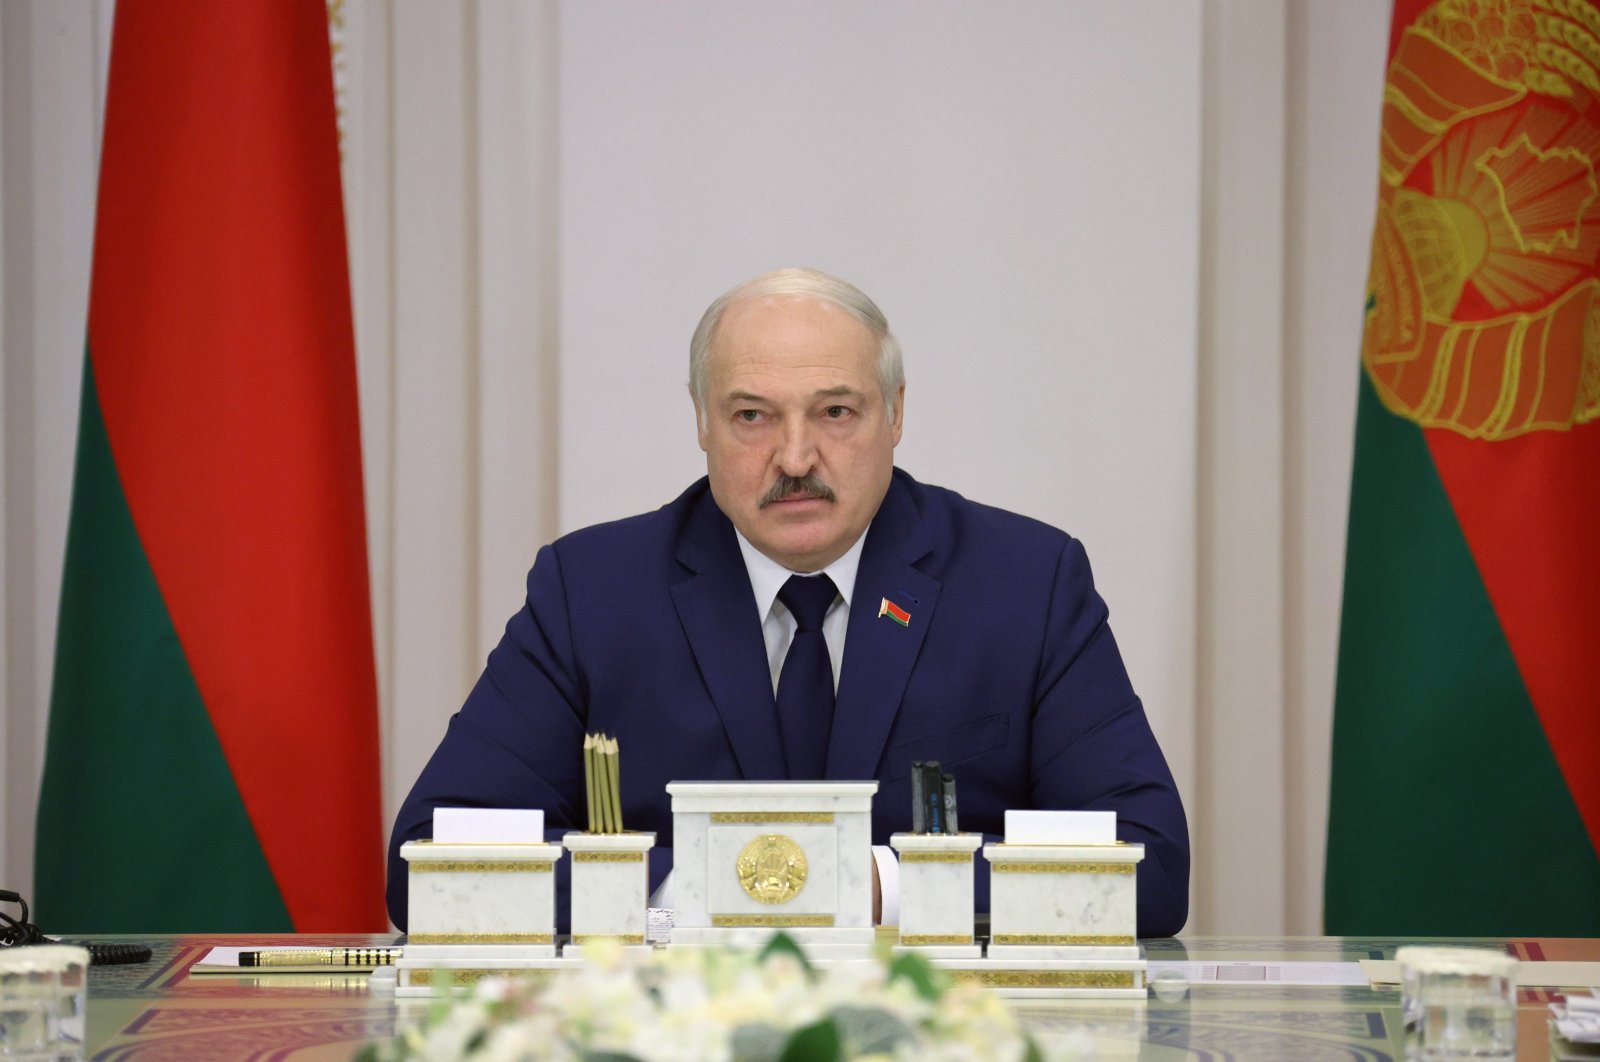 Belarusian leader Alexander Lukashenko chairs a meeting in Minsk, Belarus, Nov. 11, 2021. (Reuters Photo)